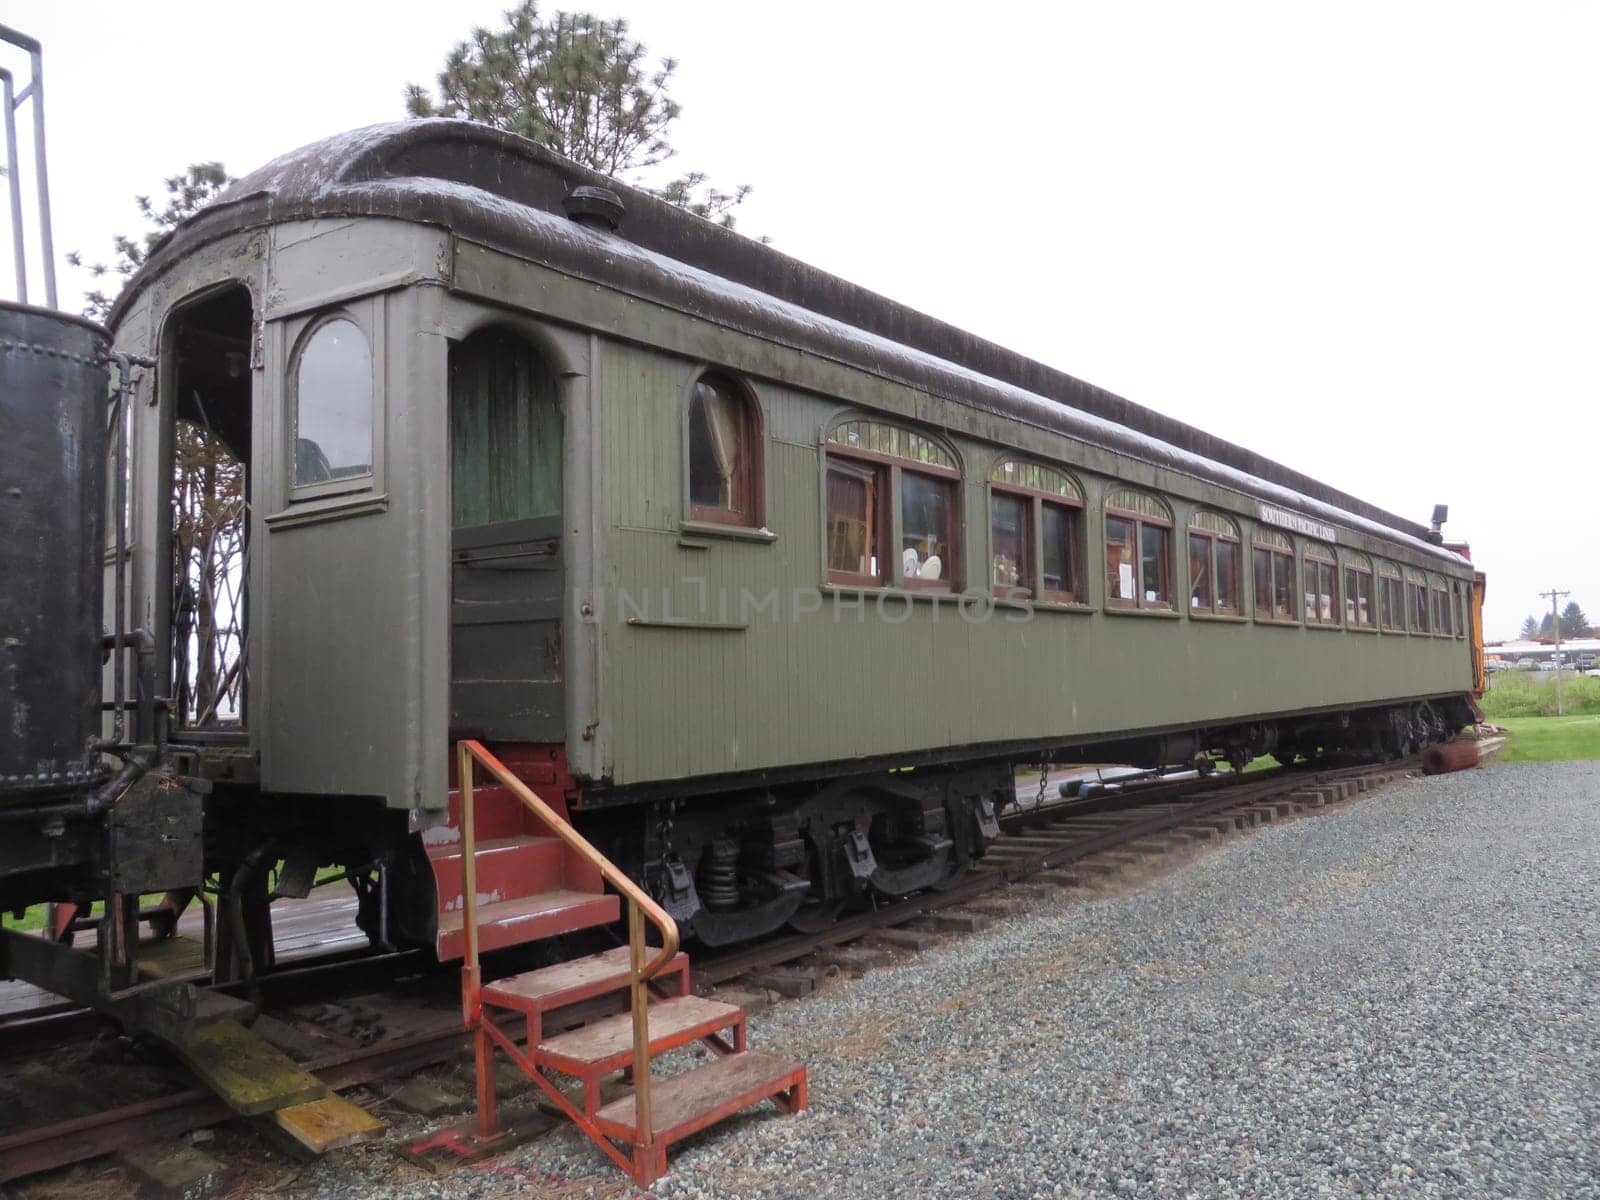 Historic Wooden Green Passenger Train Car on a Gloomy Day, Oregon Coast Scenic Railroad . High quality photo